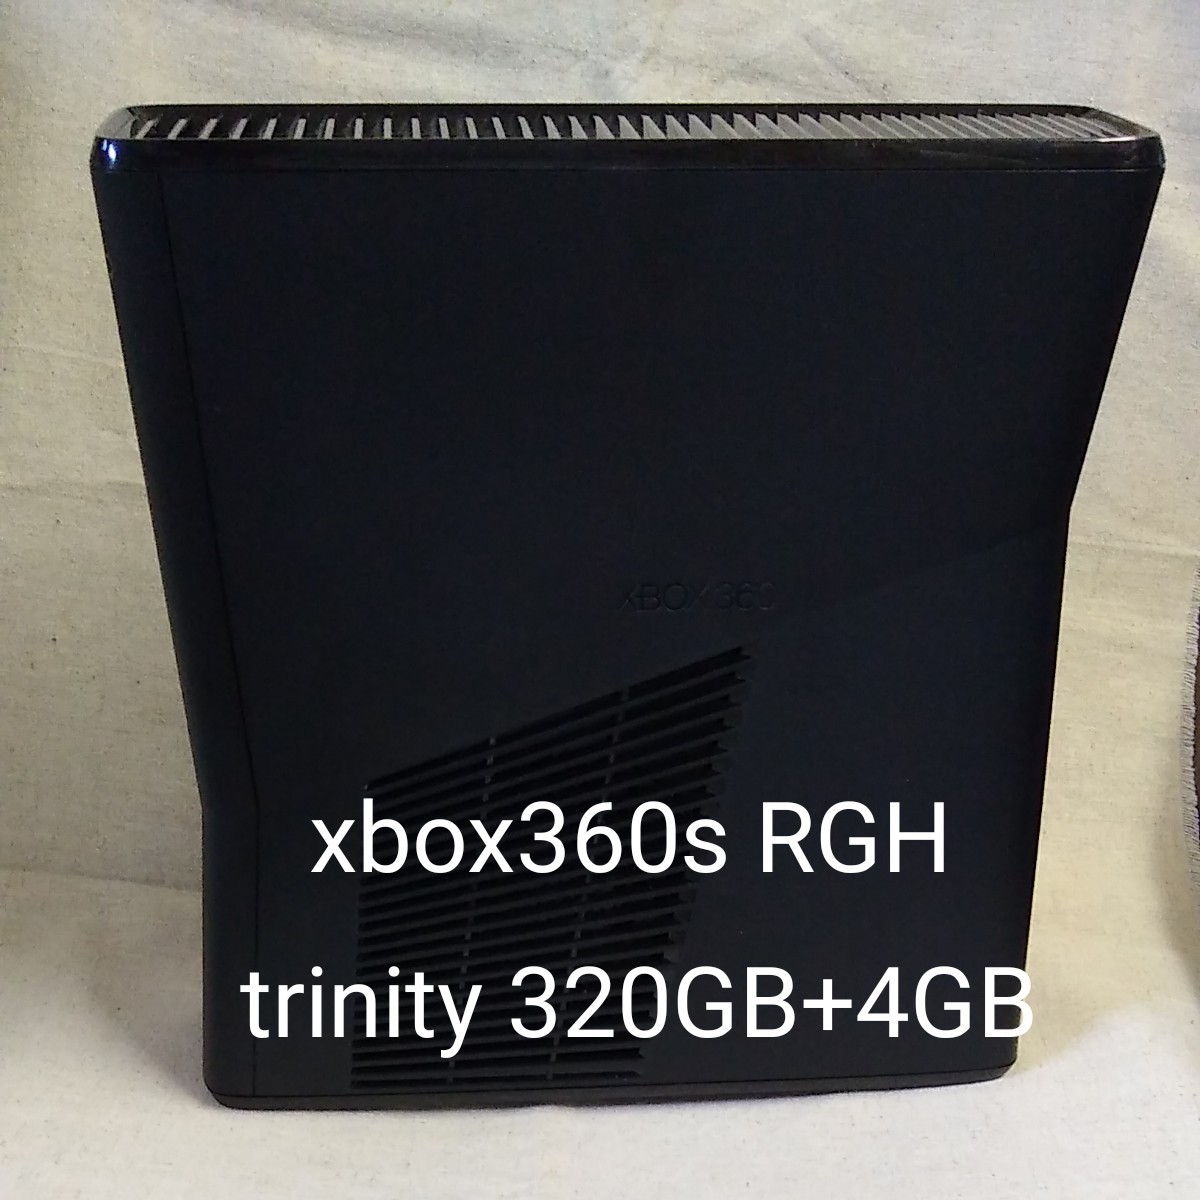 xbox360s RGH trinity 320GB+4GB 本体のみ